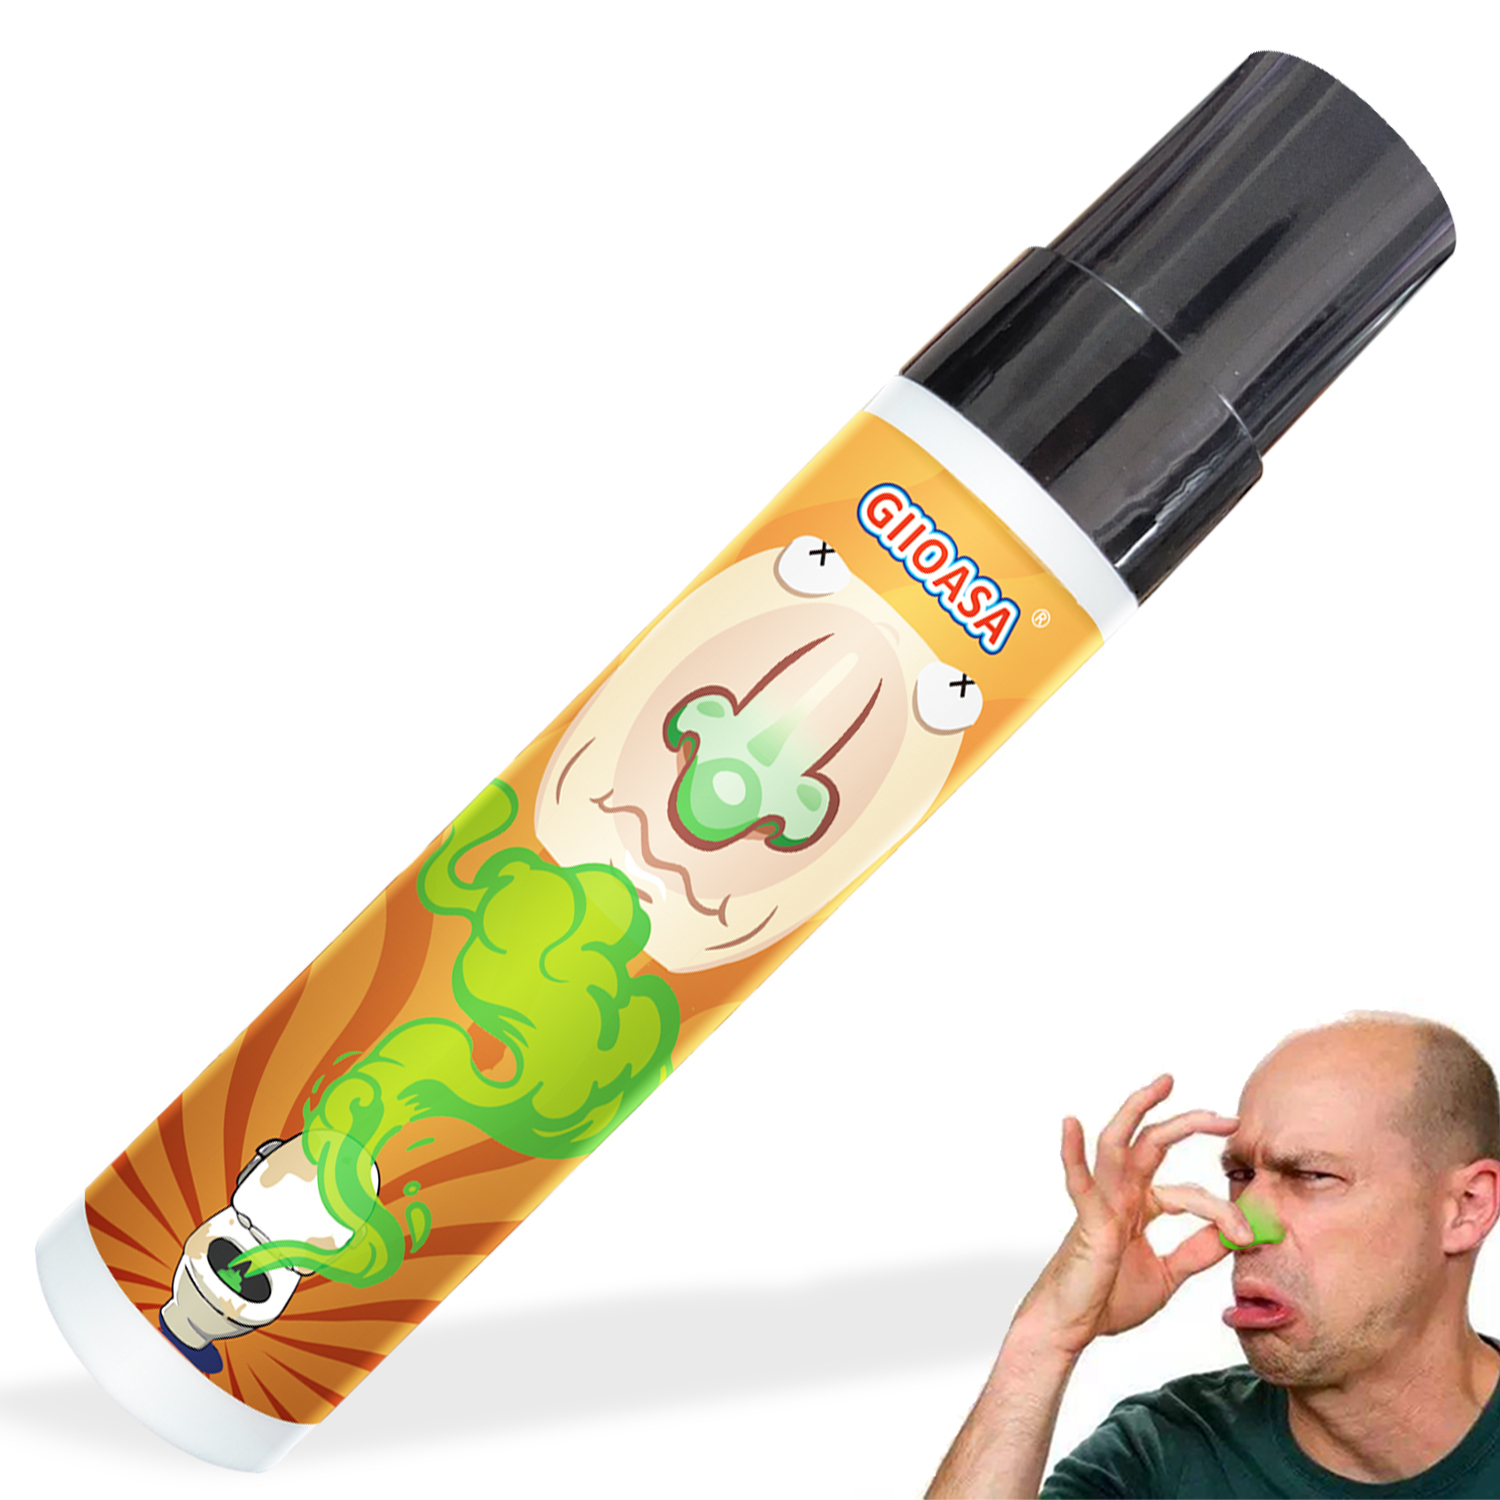 Potent Fart Spray Extra Strong Stink Spray 30ml Joke Toys For